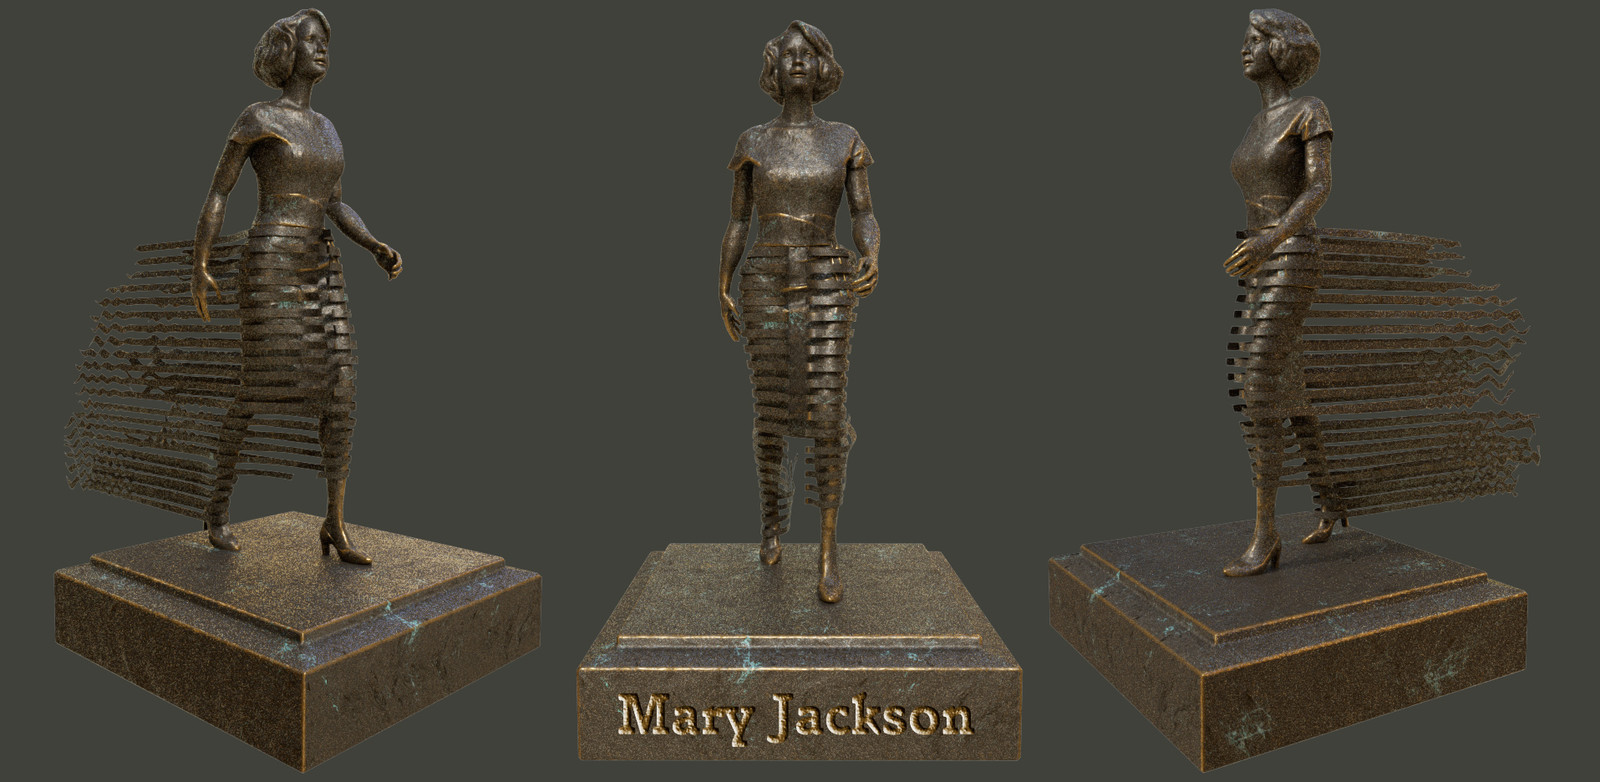 Mary Jackson, "human computer", engineer &amp; diversity advocate. 